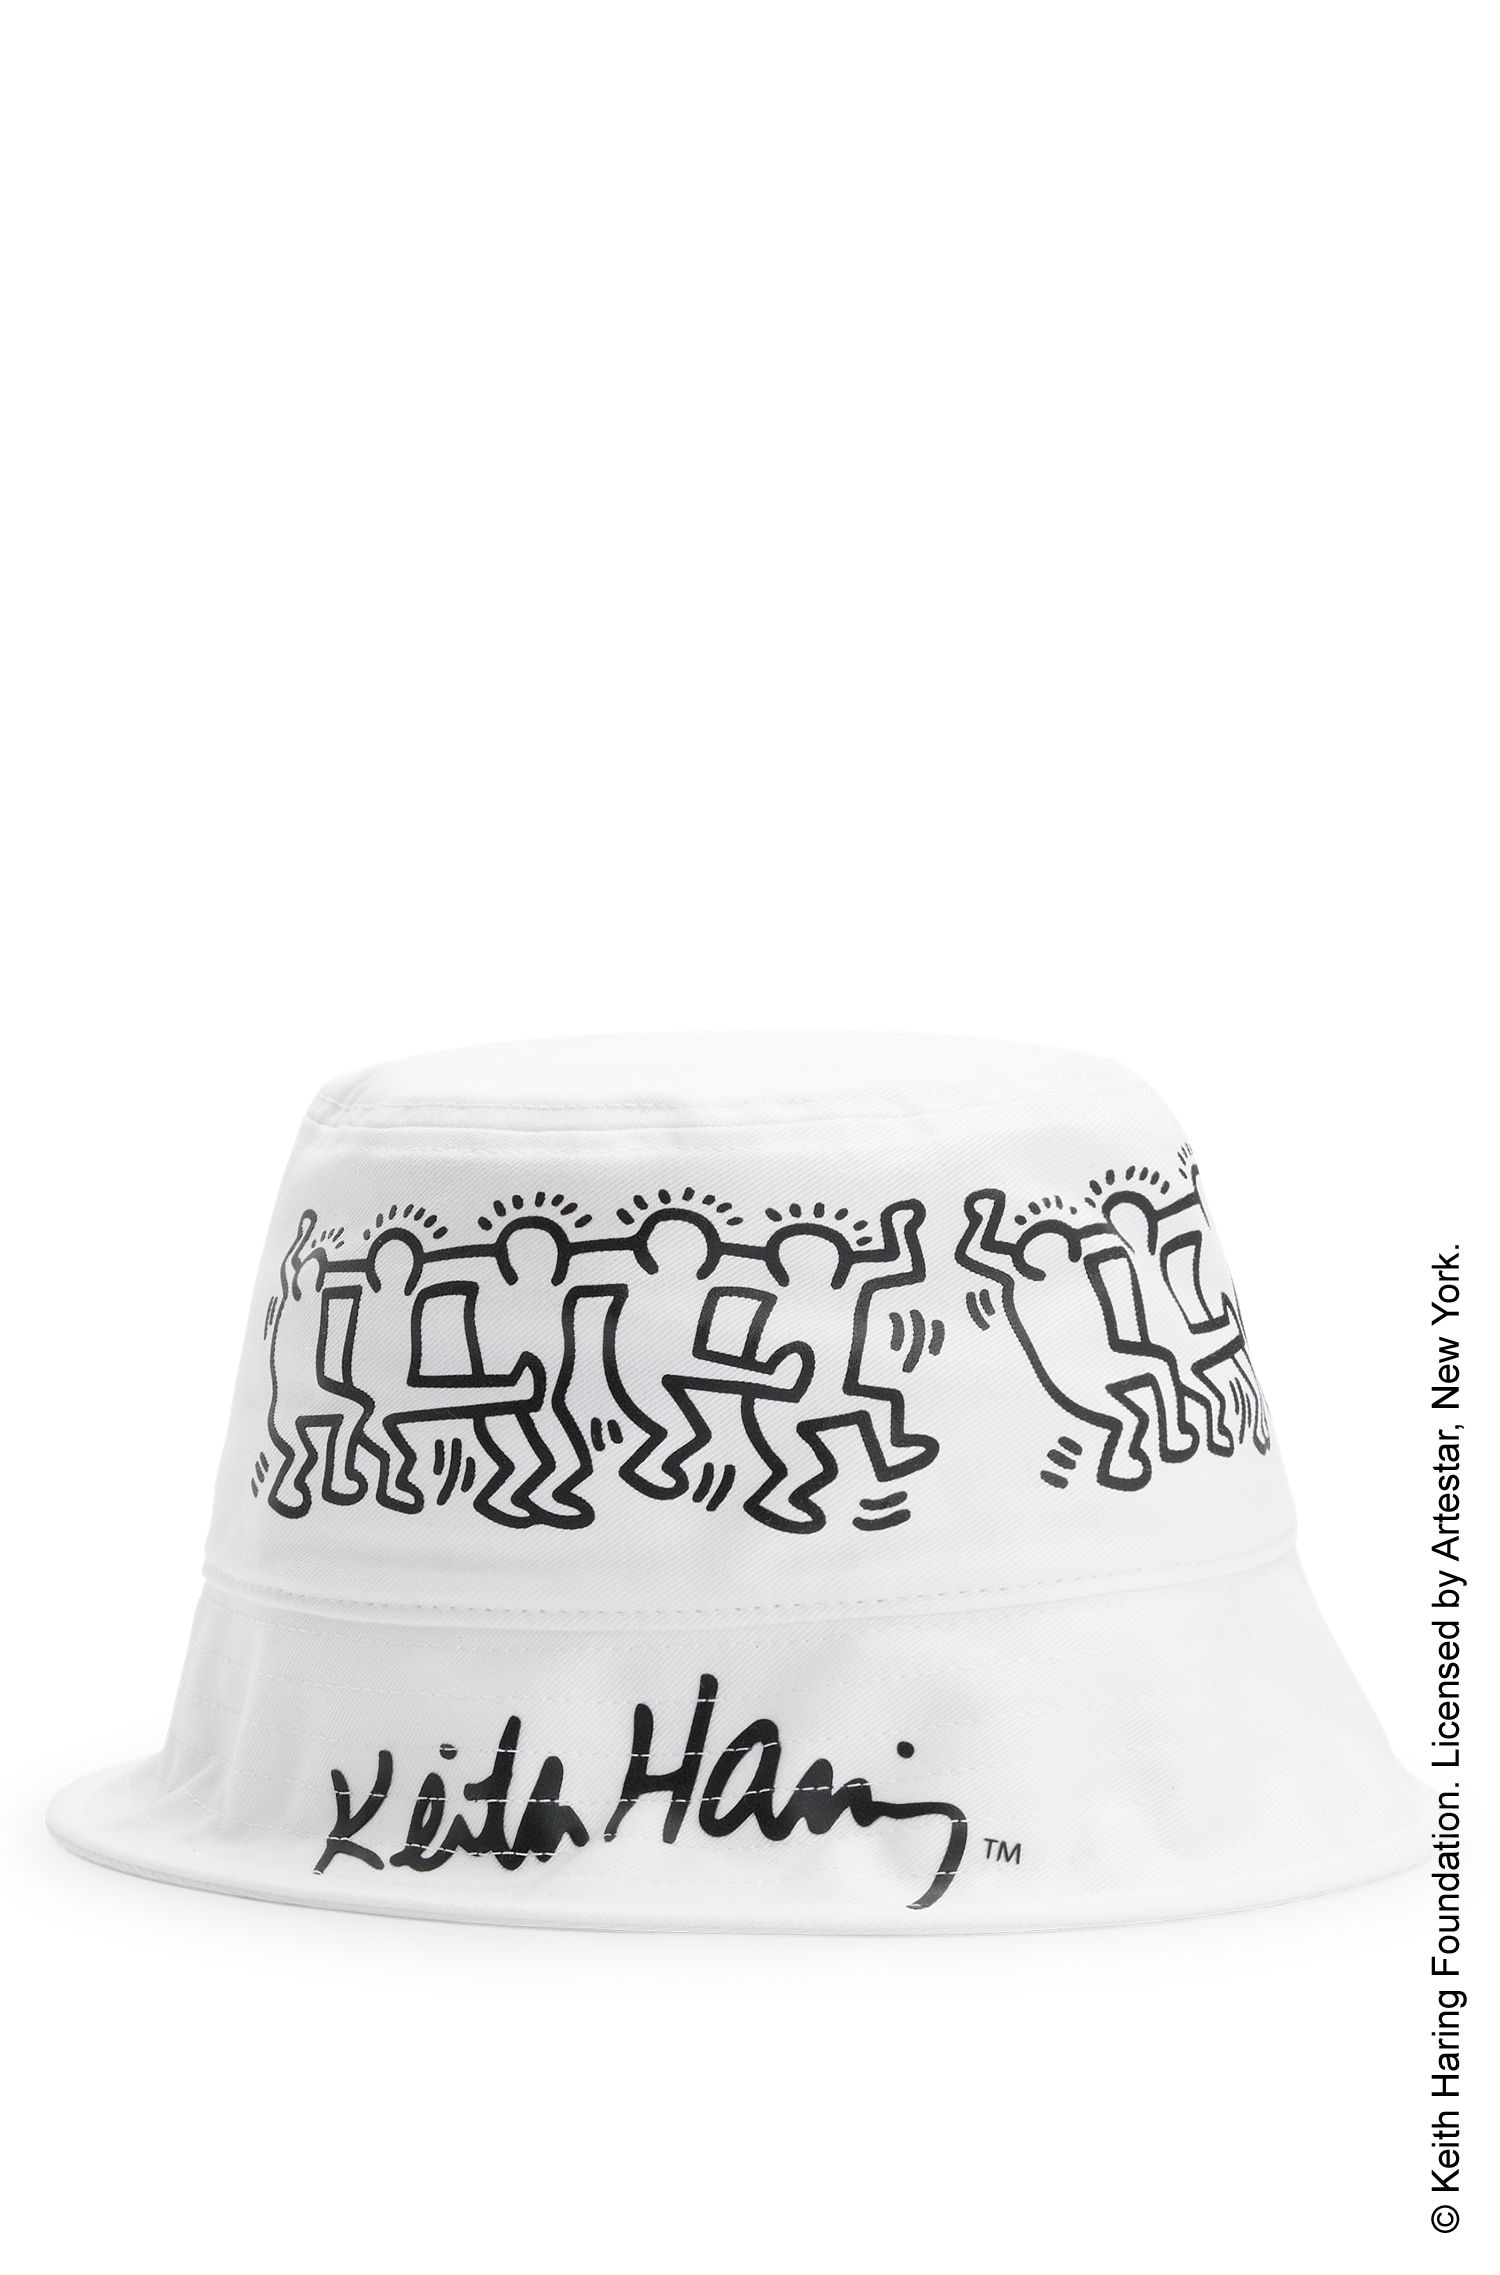 BOSS x Keith Haring 特别图案渔夫帽